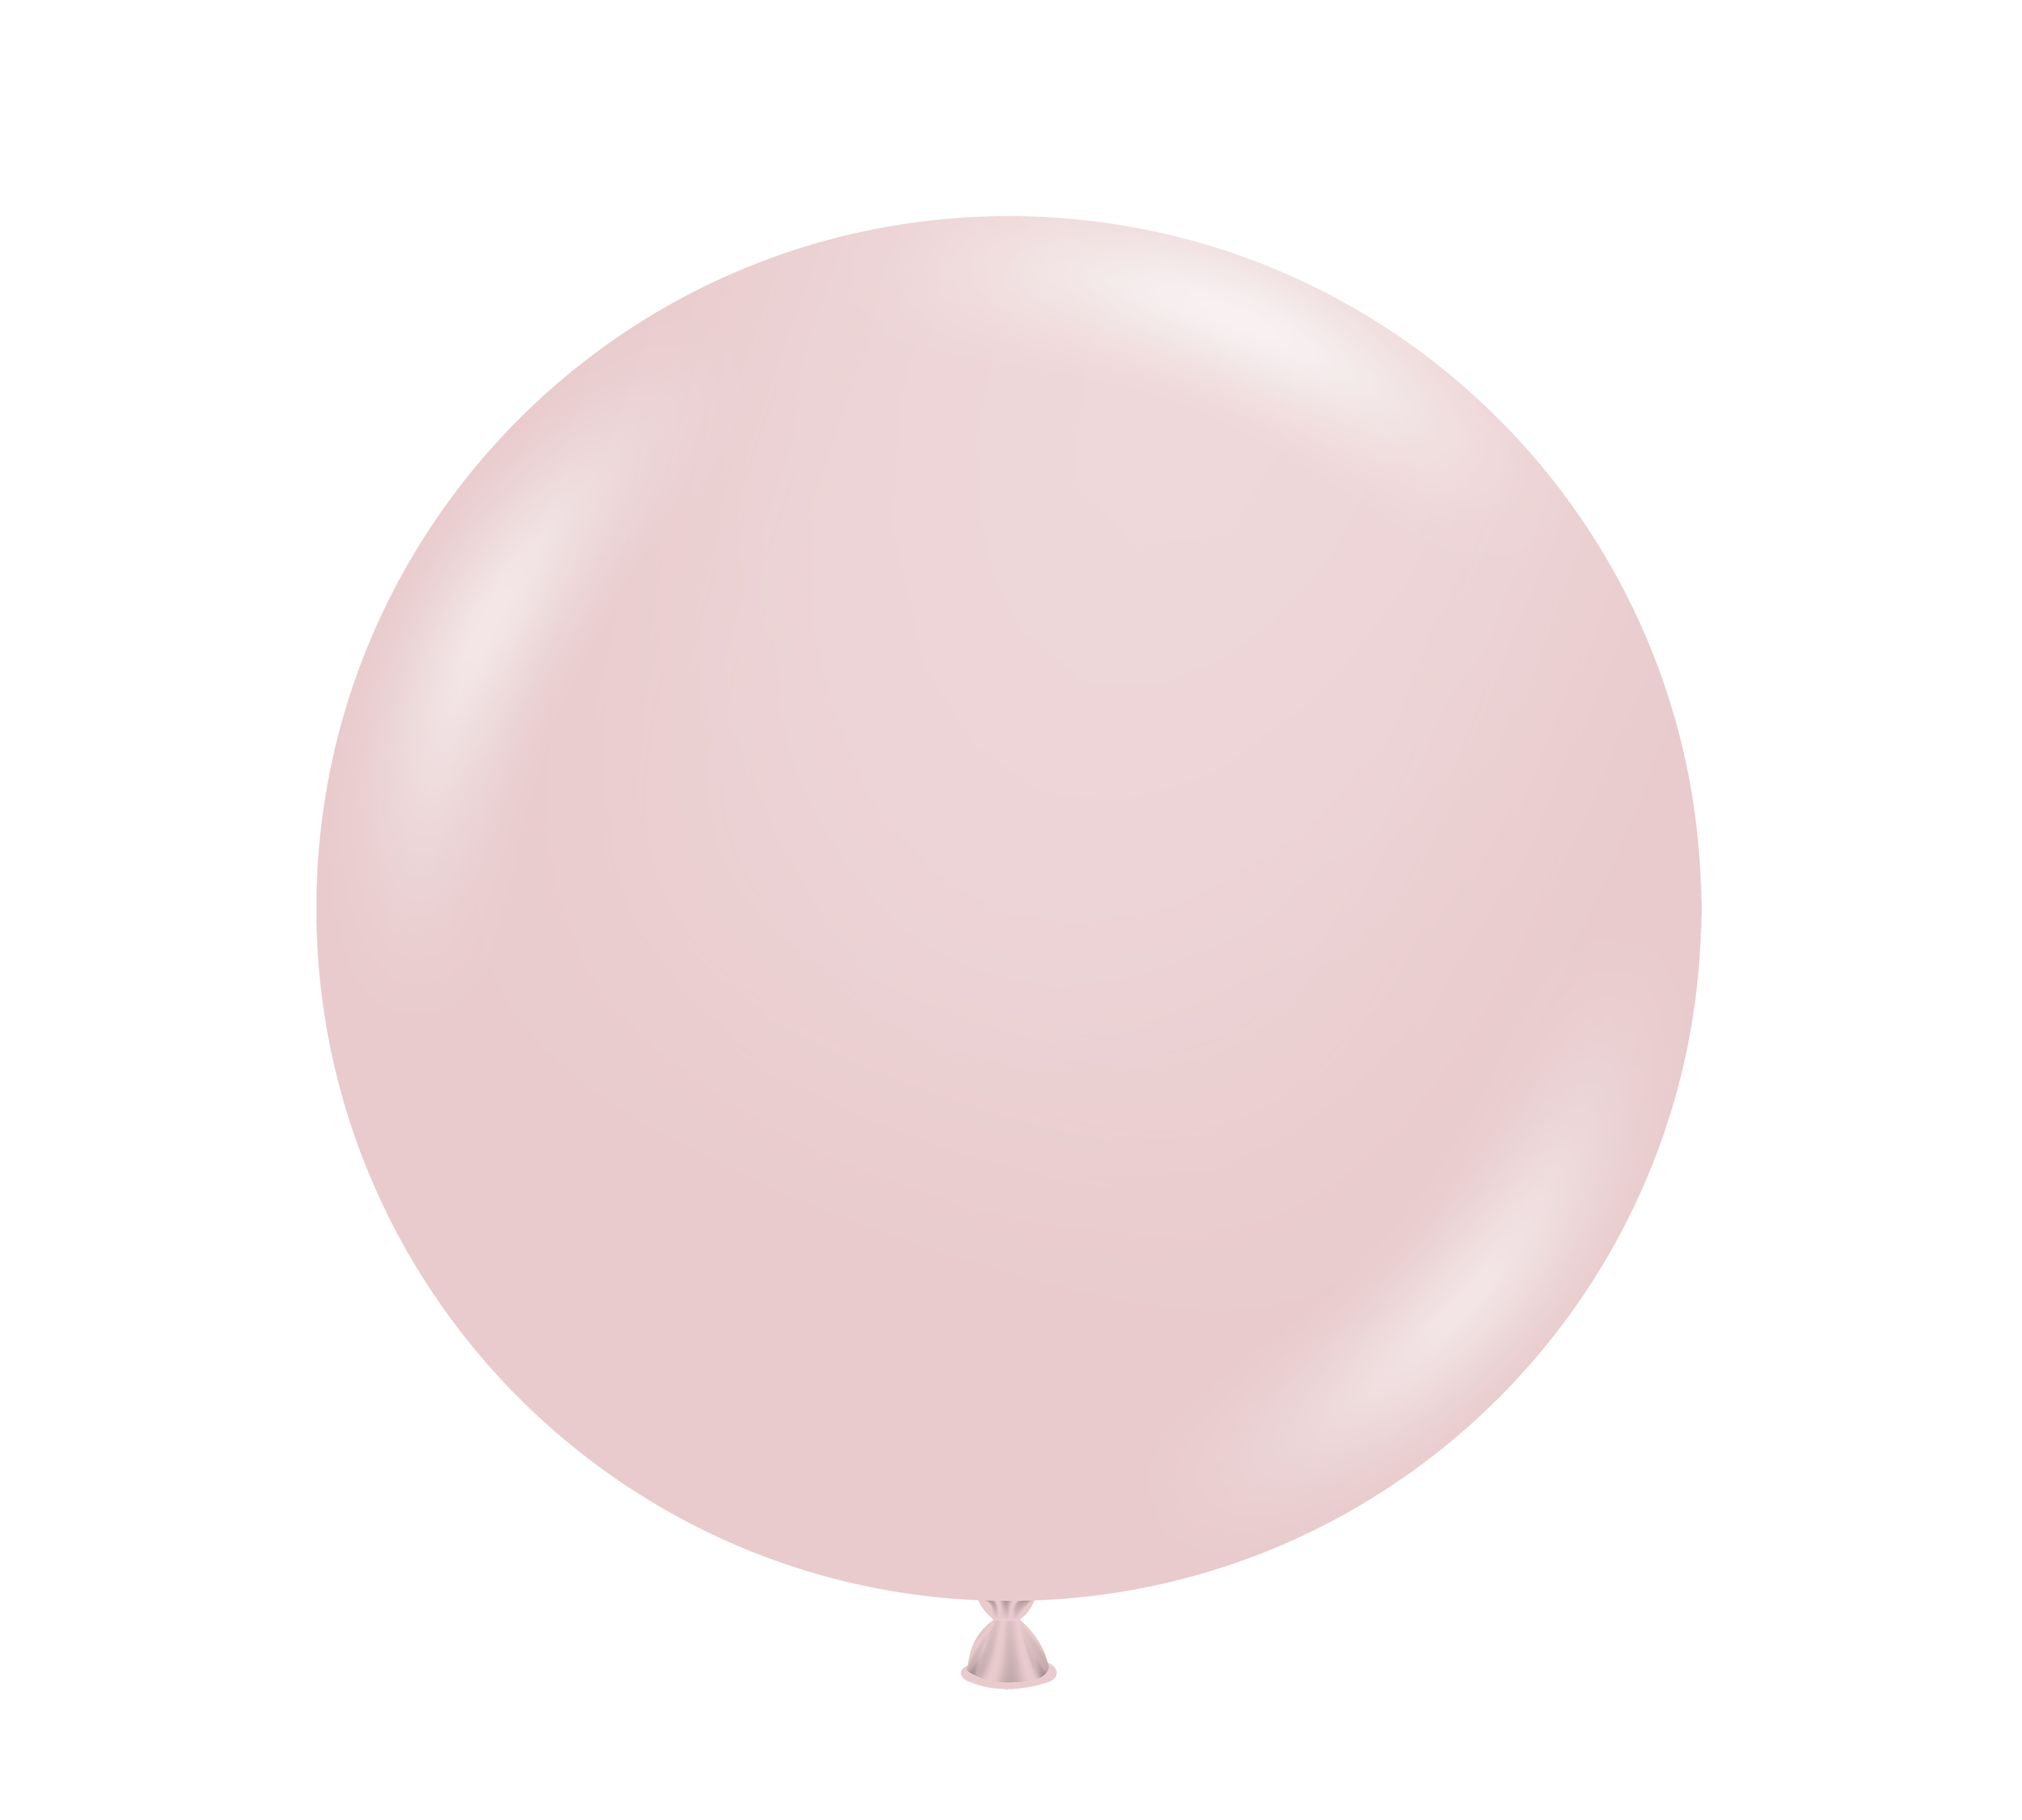 24" TUFTEX Cameo Latex Balloons | 25 Count